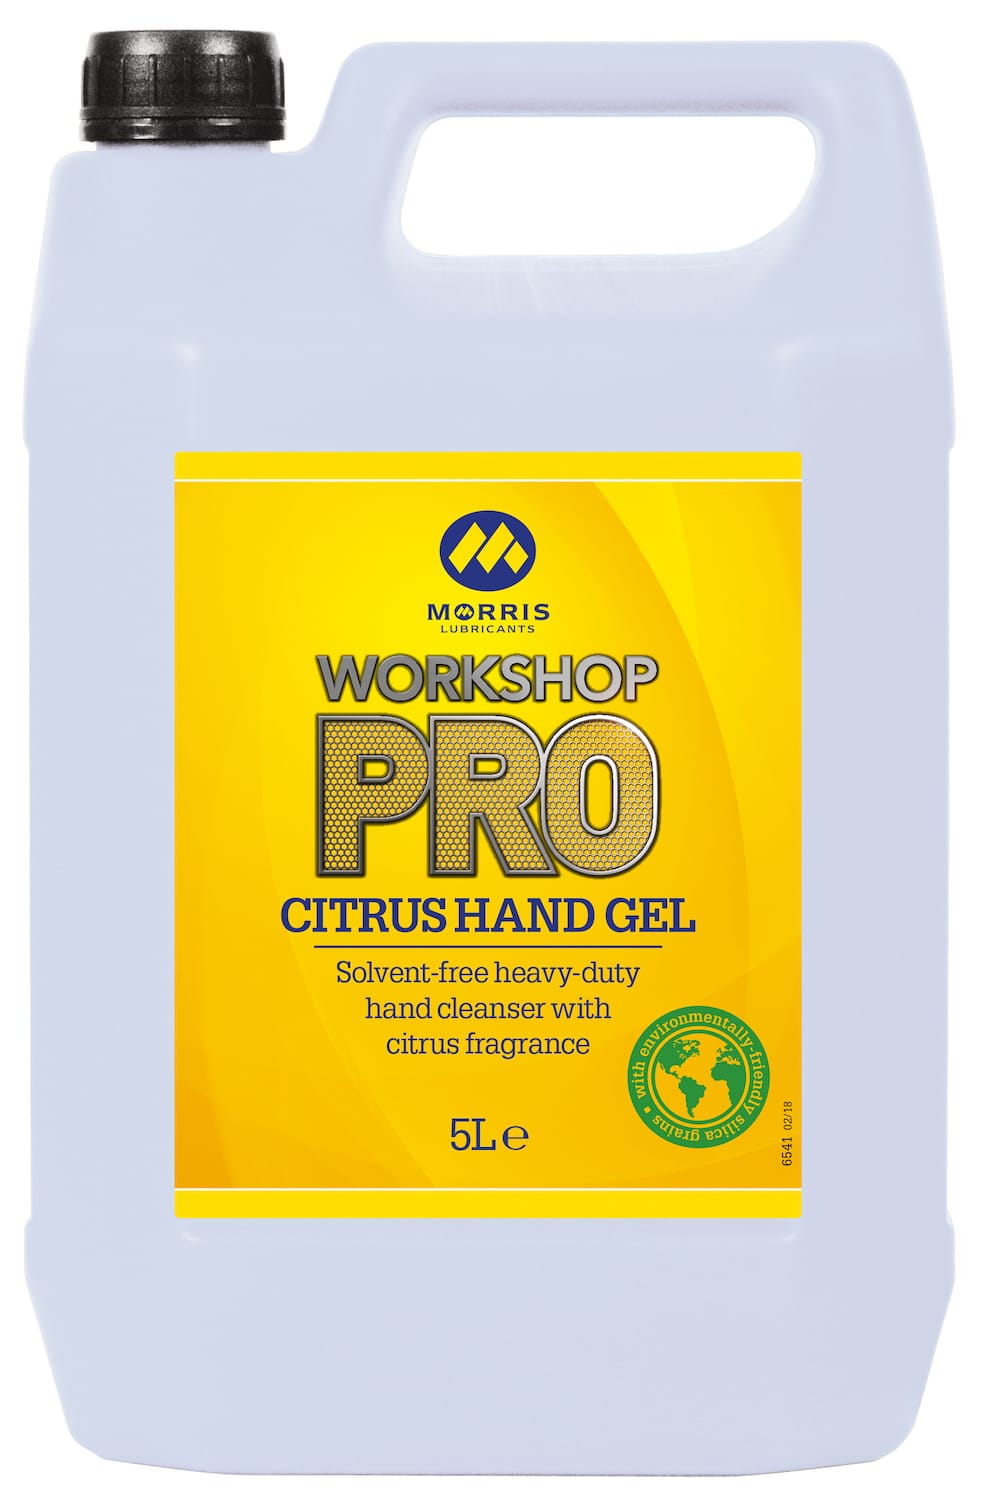 Workshop Pro Citrus Hand Gel (Heavy Duty H/C) (Formerly called Abgel)